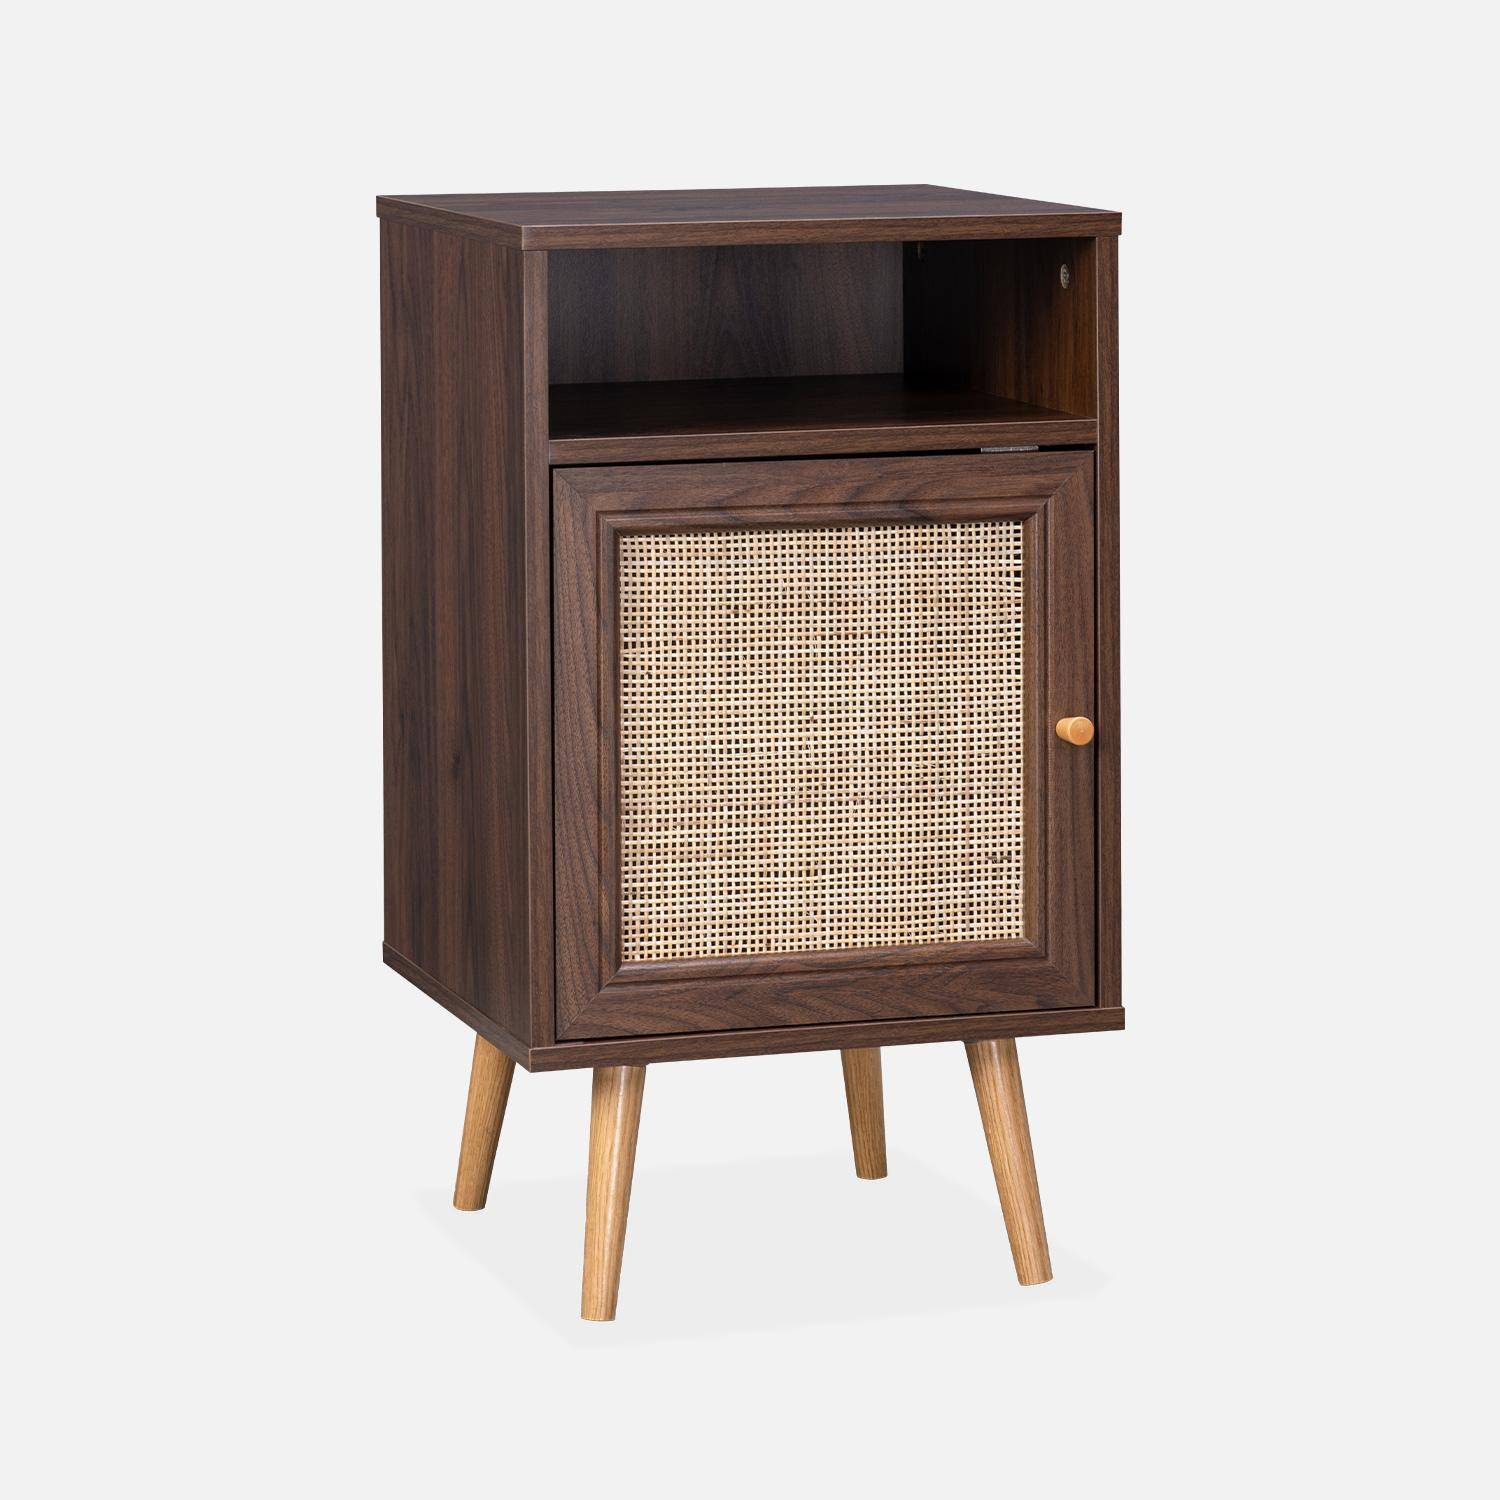 Scandi-style wood and cane rattan bedside table with cupboard, 40x39x70cm - Boheme - Dark Wood colour,sweeek,Photo2